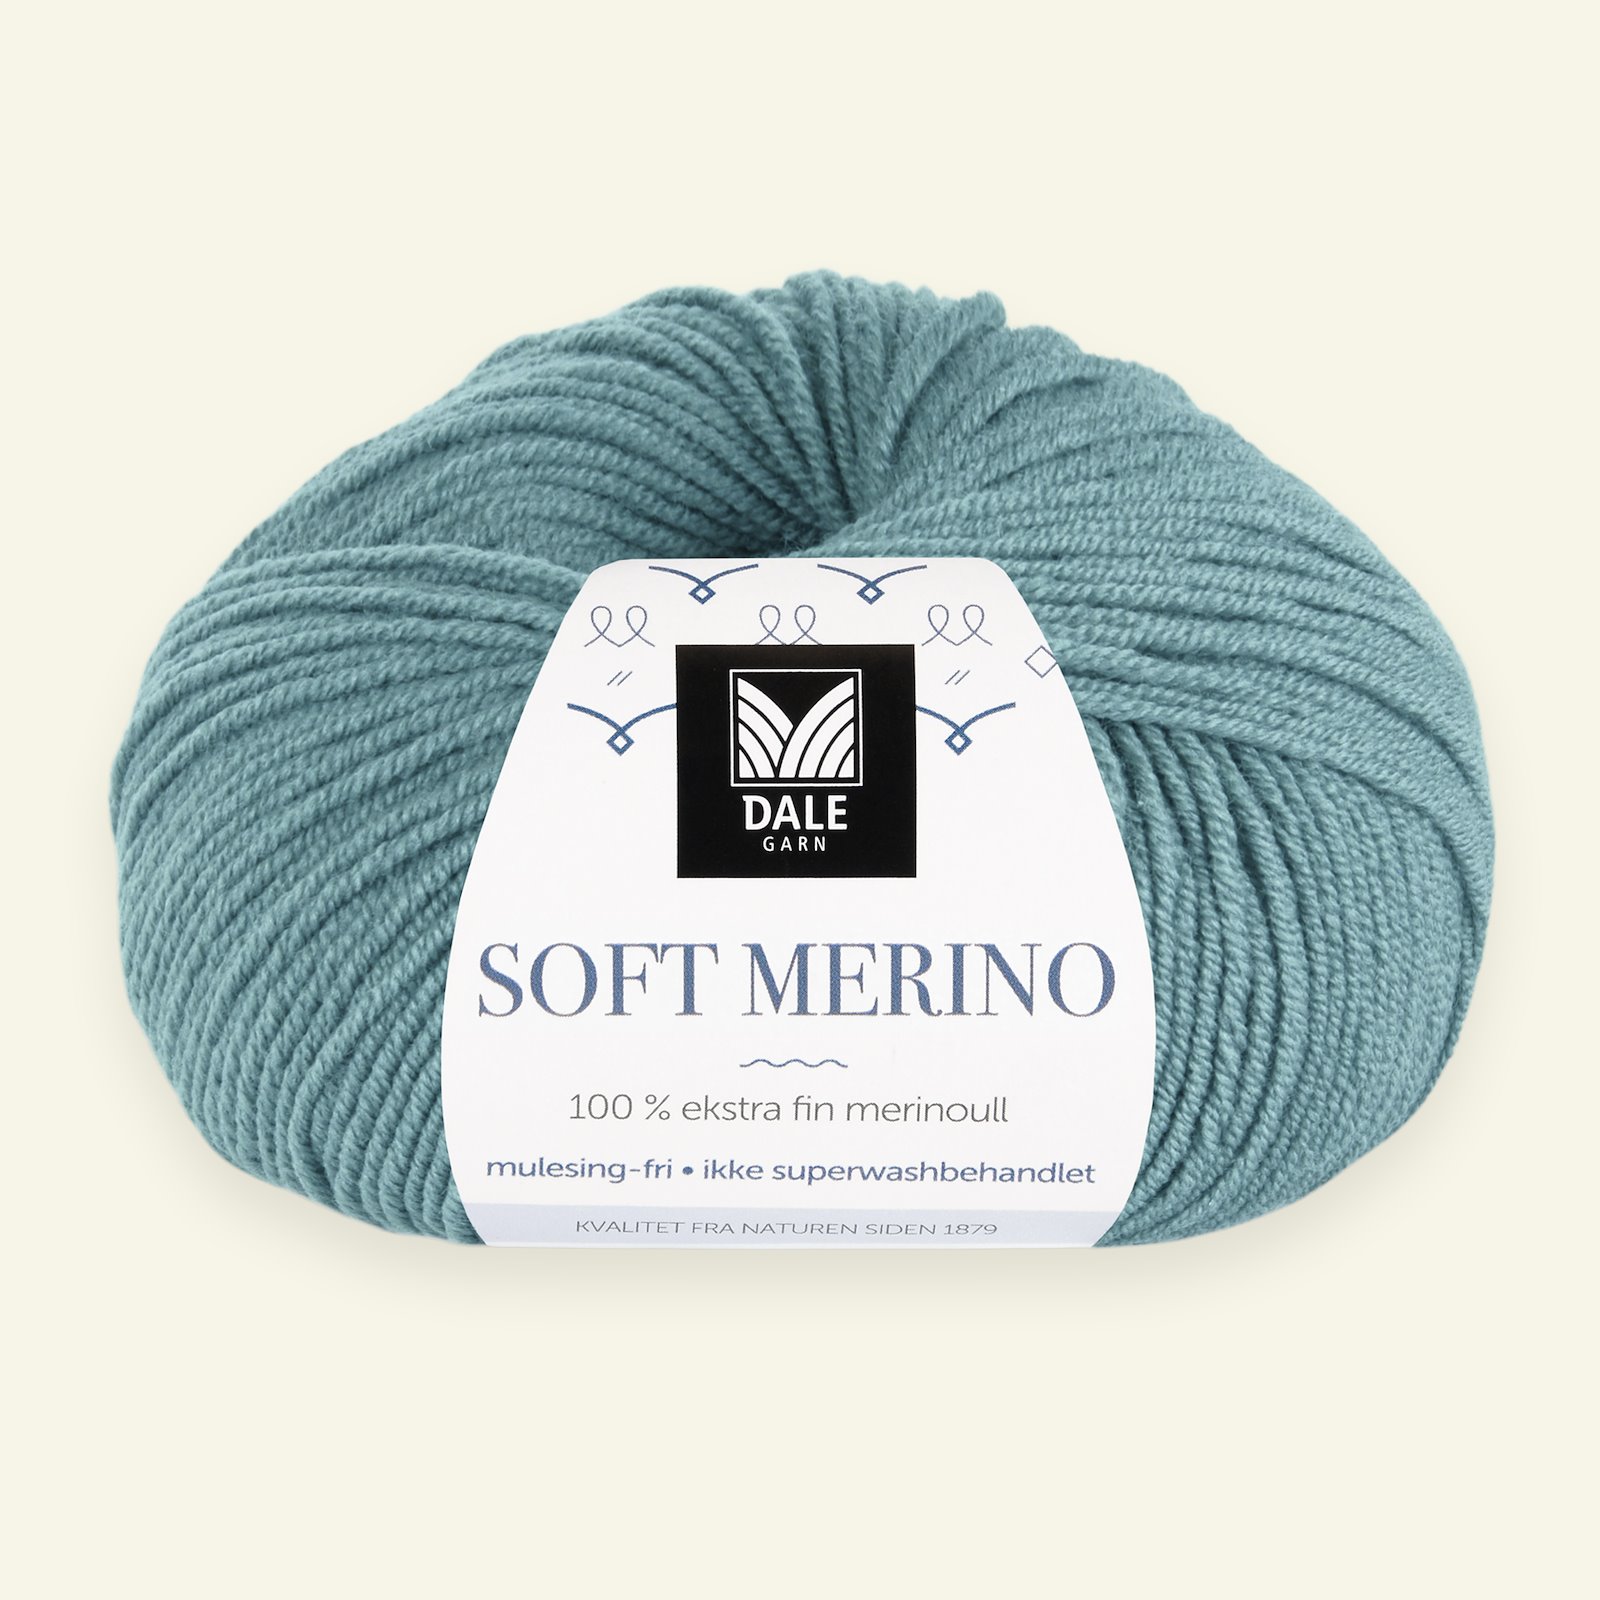 Dale Garn, 100% extra fint merinogarn "Soft Merino", aqua (3012) 90000333_pack